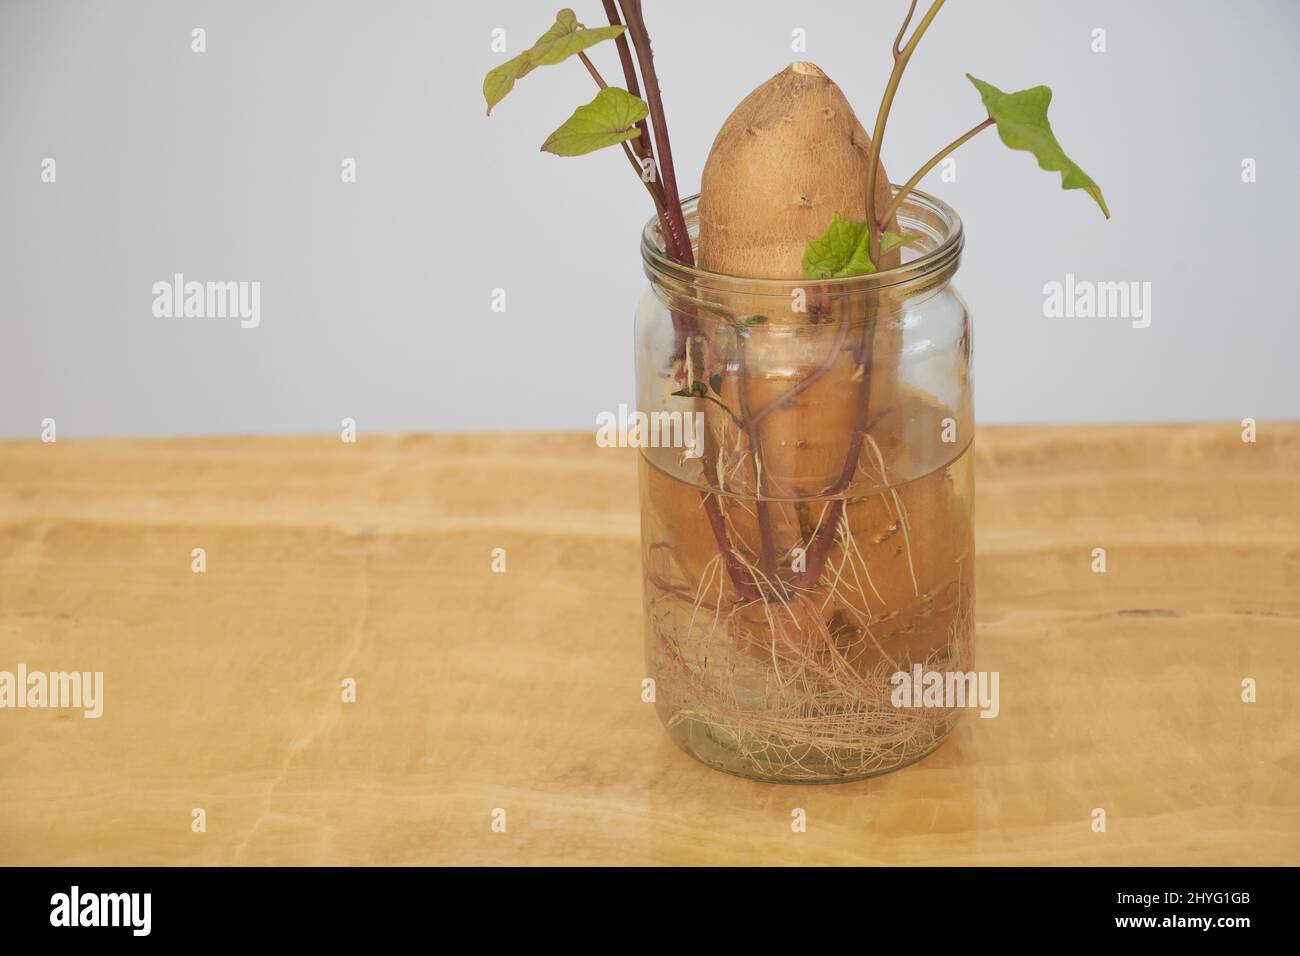 Sweet potato growing in water -Ipomoea batatas - concept for care - New shoots of sweet potato growing indoor. Stock Photo